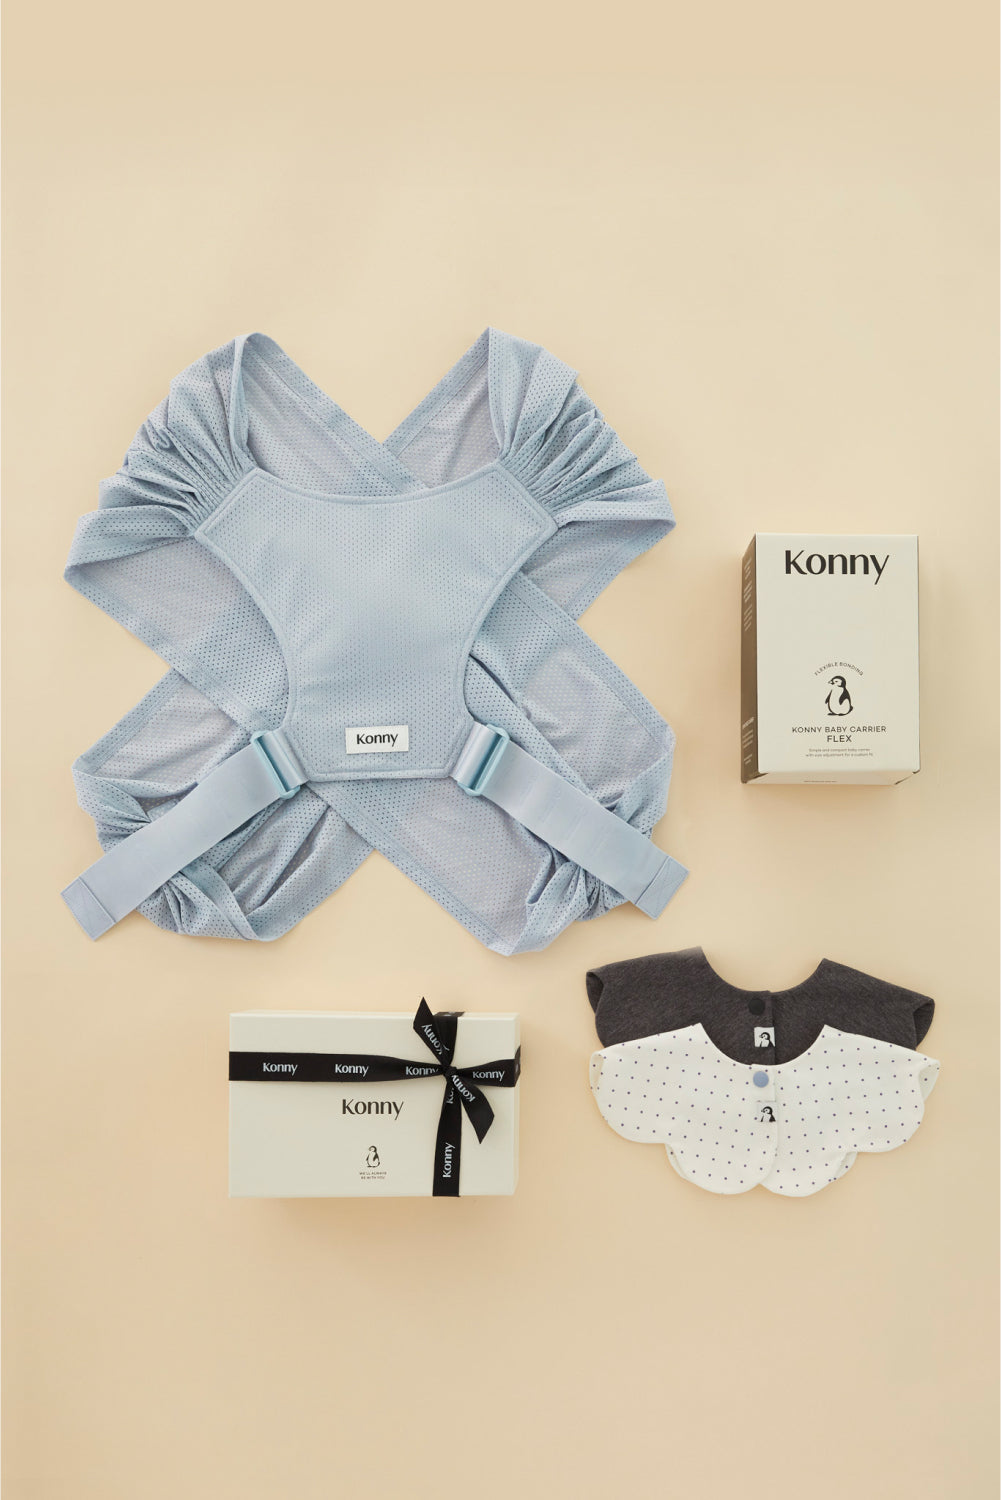 Konny Baby Carrier FLEX Signature Gift Set